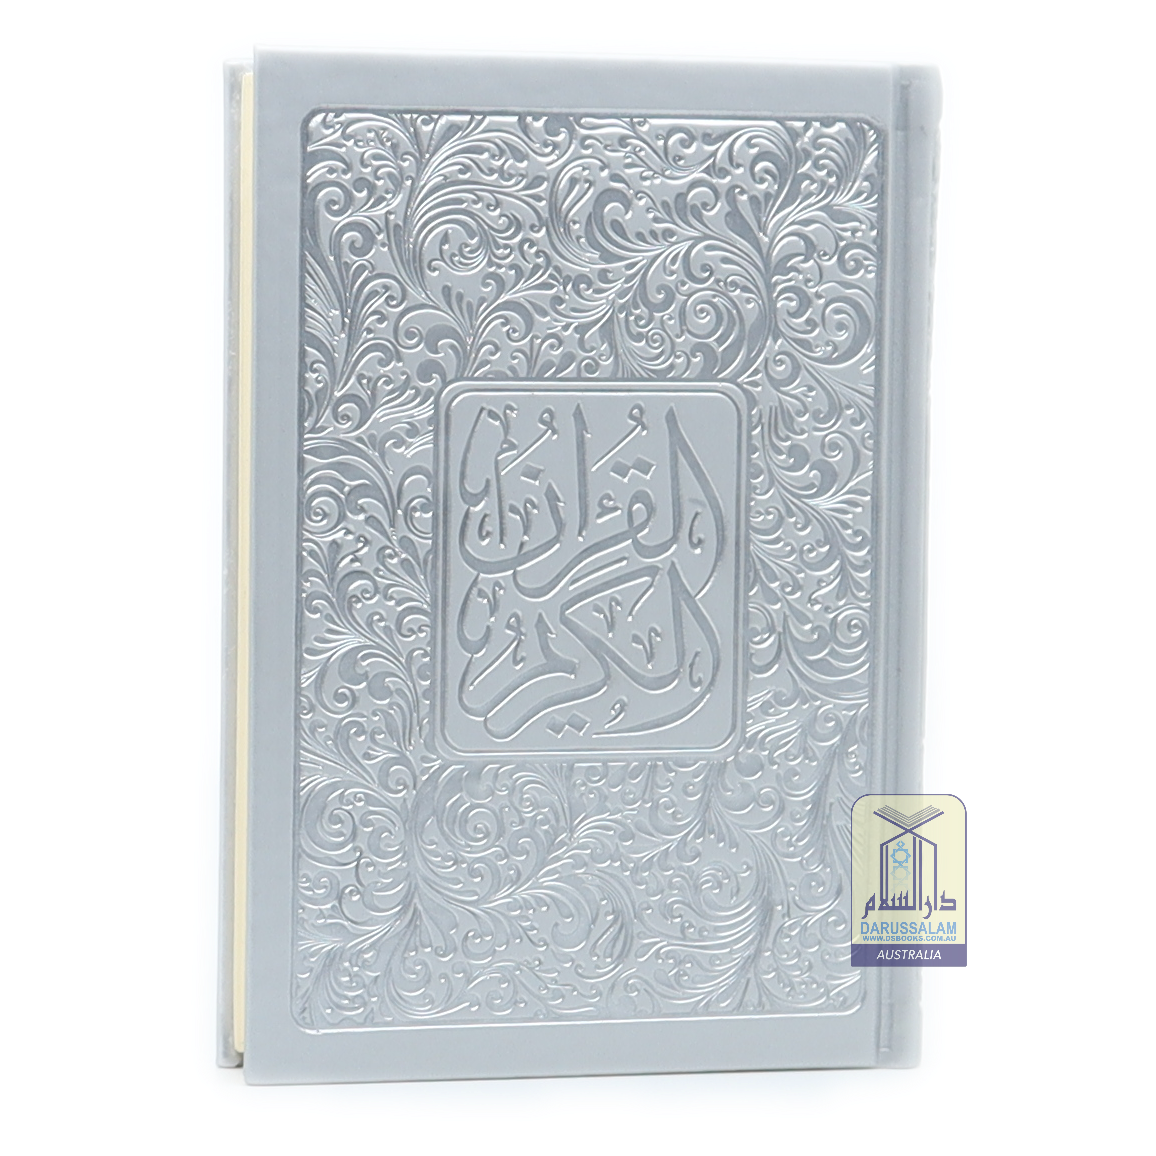 Quran 14.5x20.5cm A5, Silver - Cream pages, Arabic Text Uthmani Script Cover Design